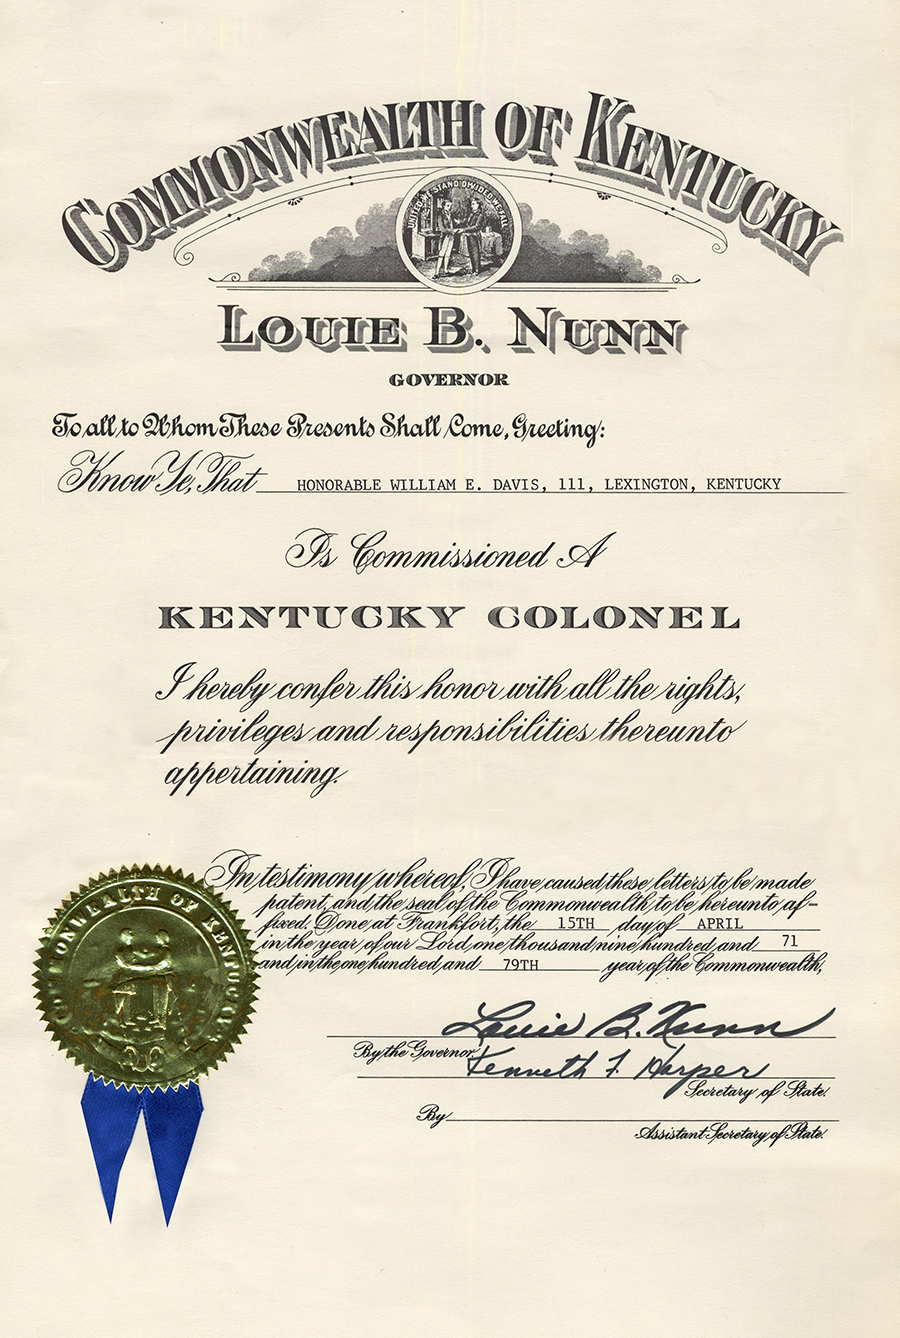 Certificate honoring William E. Davis as a Kentucky Colonel